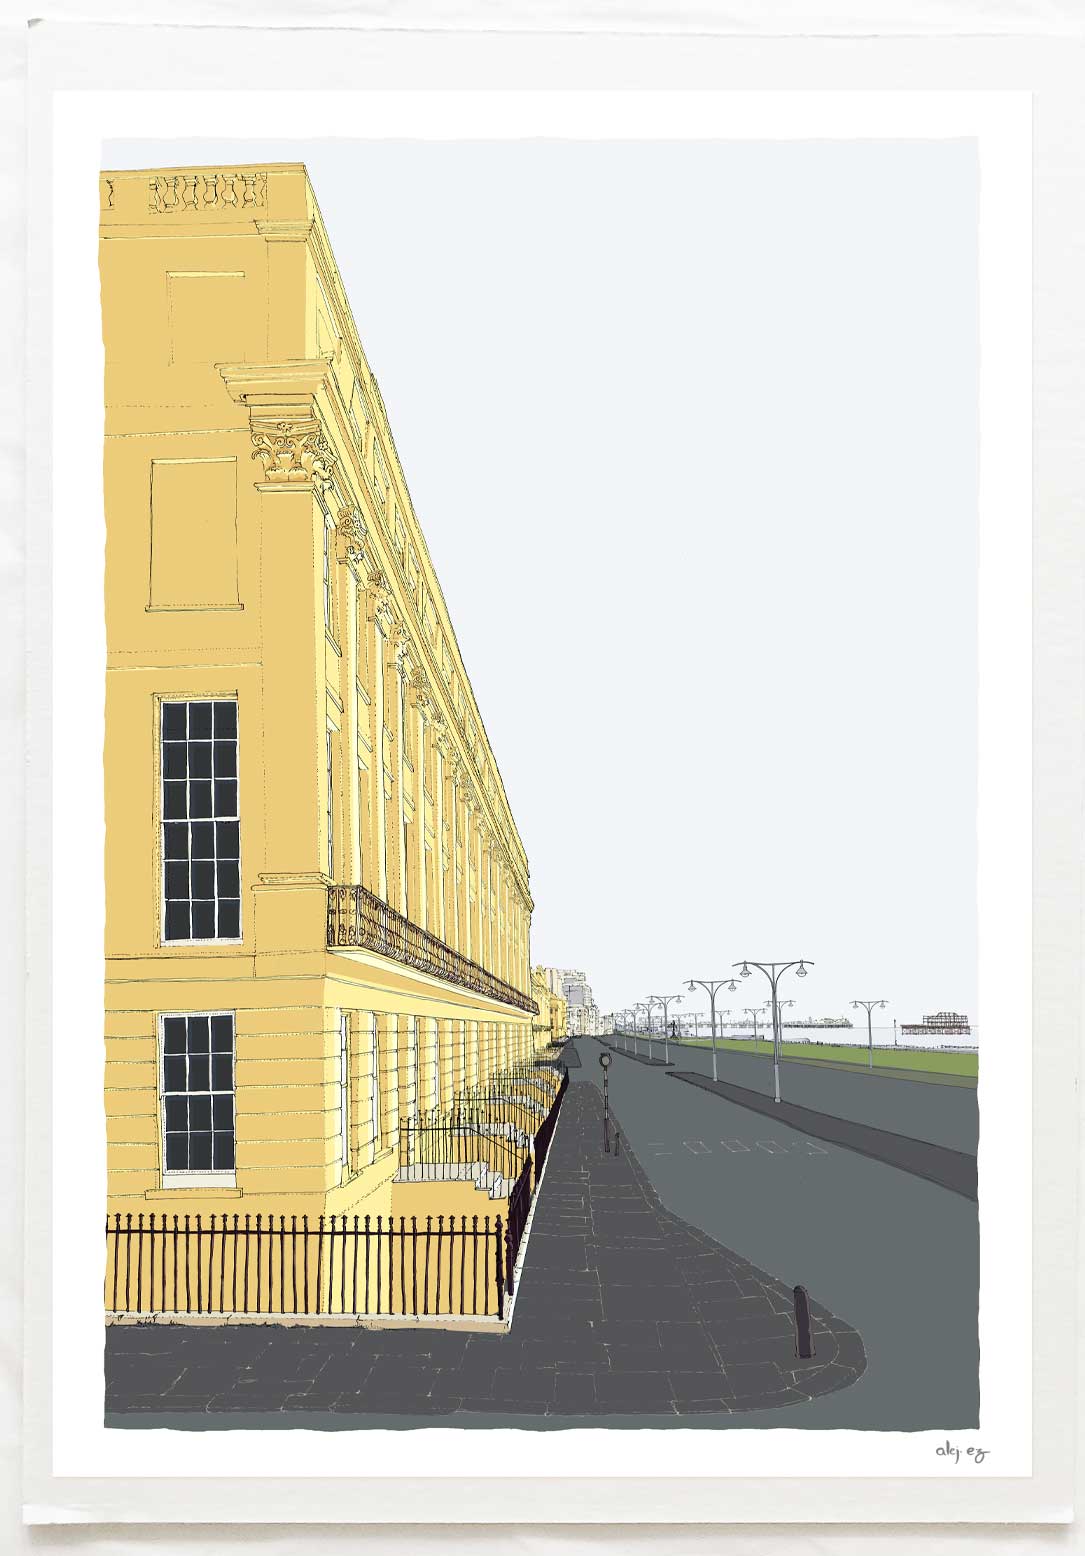 Art print titled Brunswick Terrace Brighton Seafront by artist alej ez